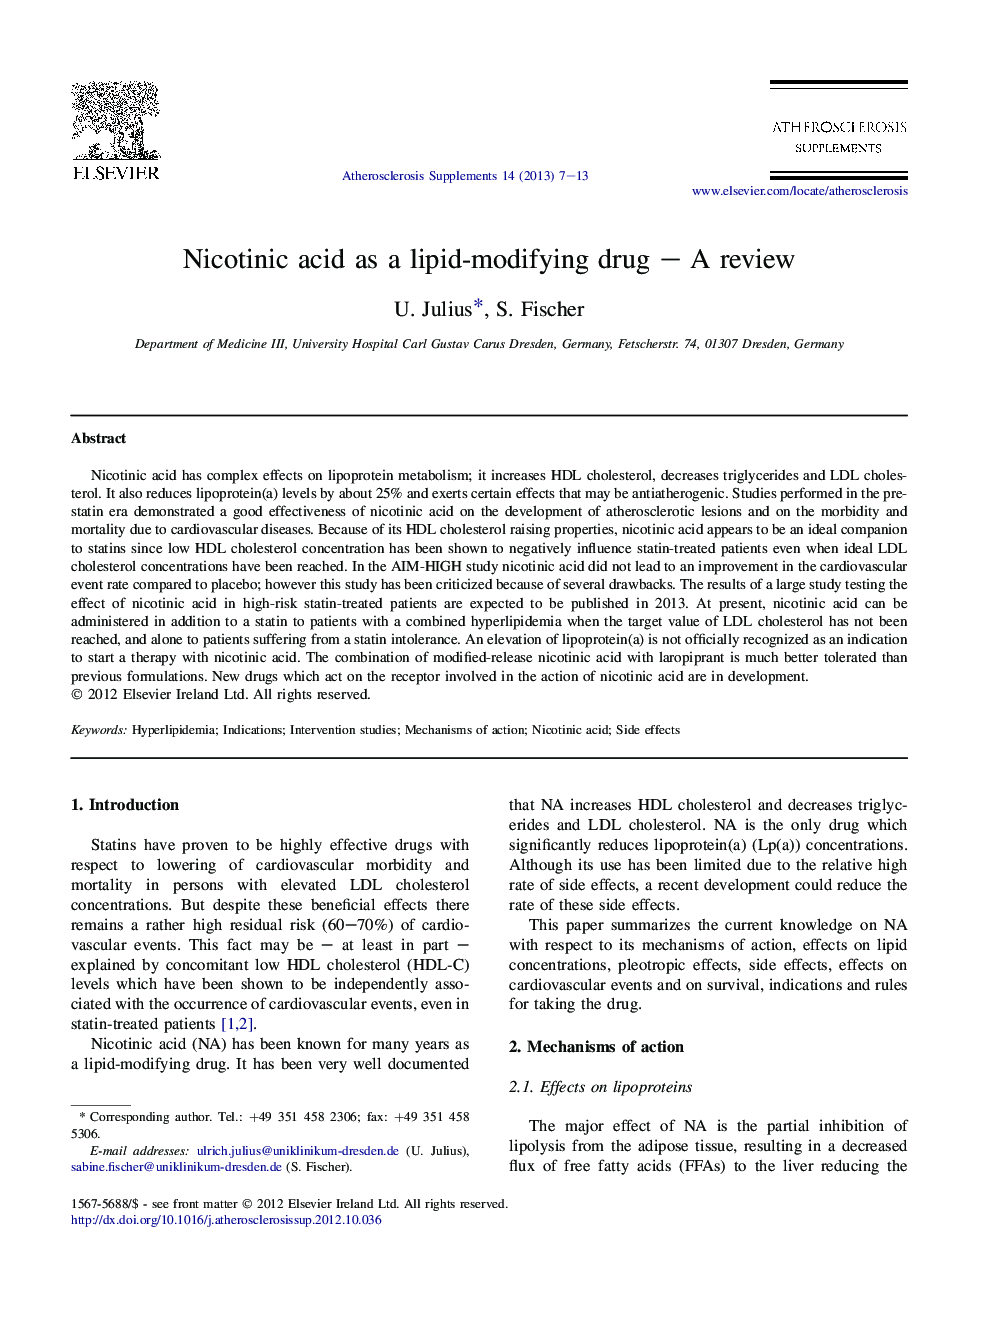 Nicotinic acid as a lipid-modifying drug – A review